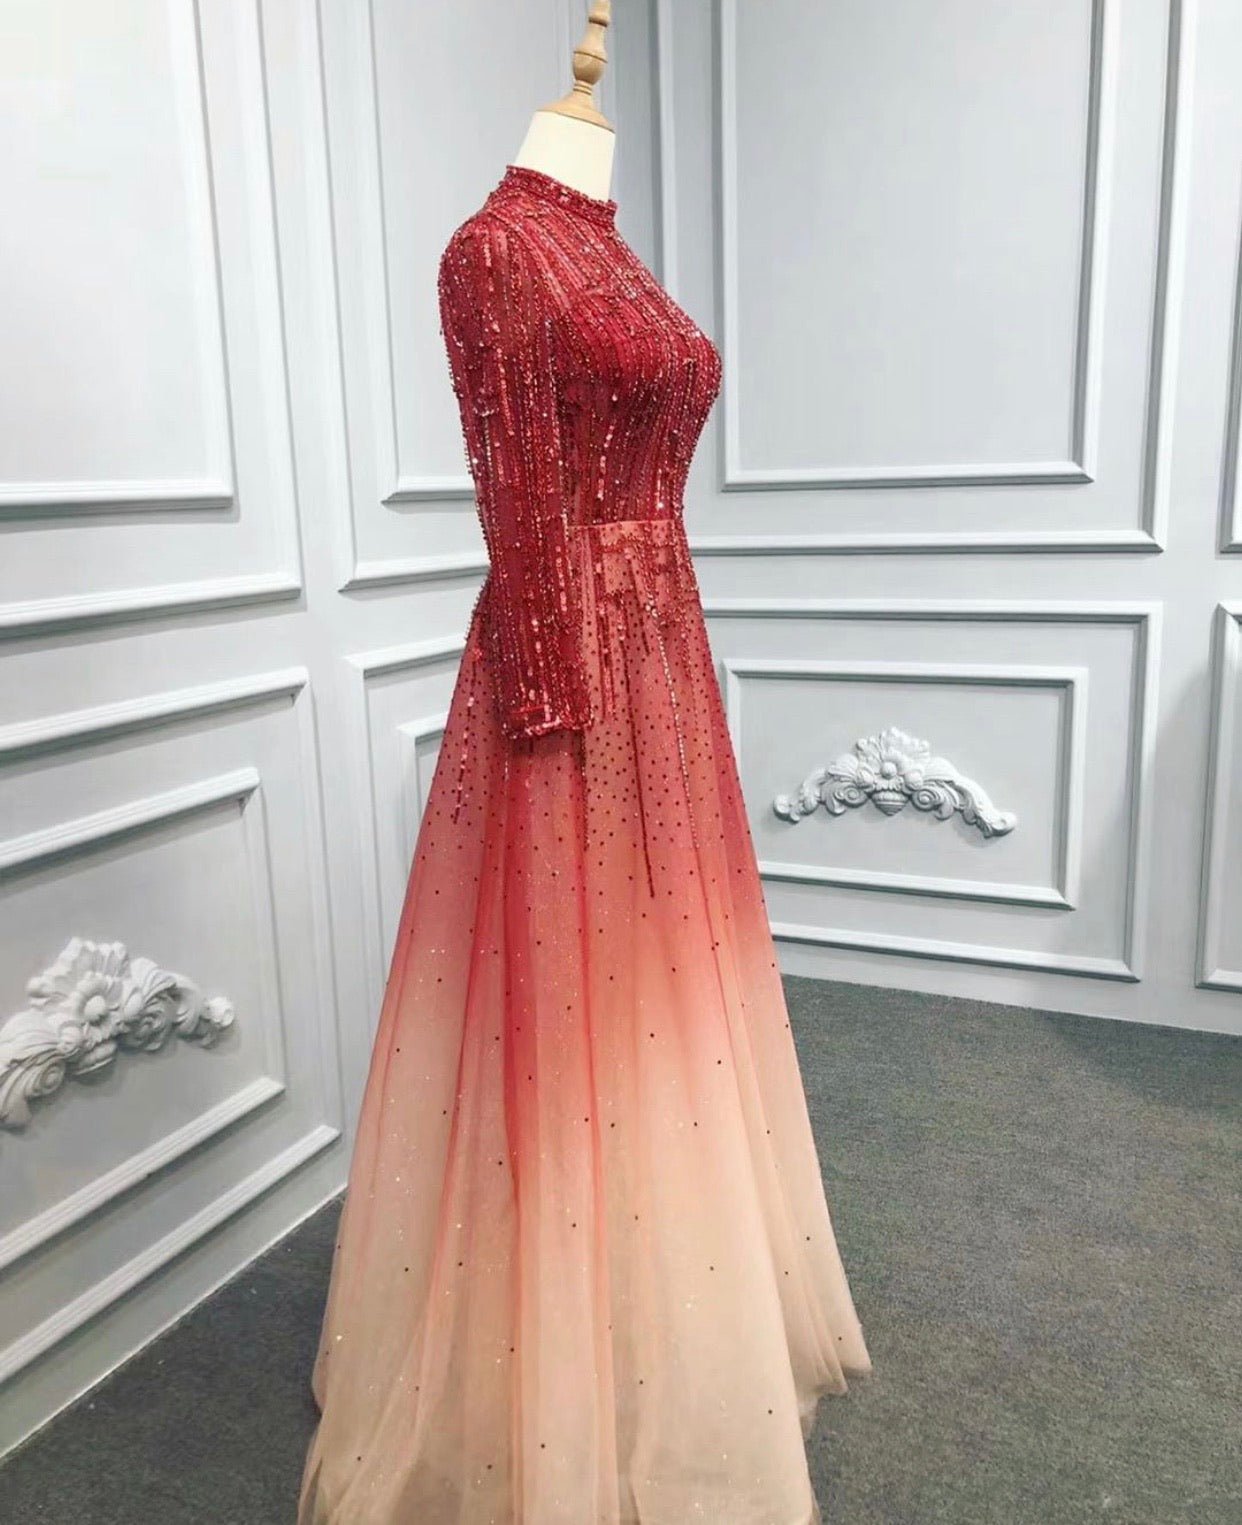 Priscilla Long Sleeves Beading Embellished Formal Dress - Mscooco.co.uk